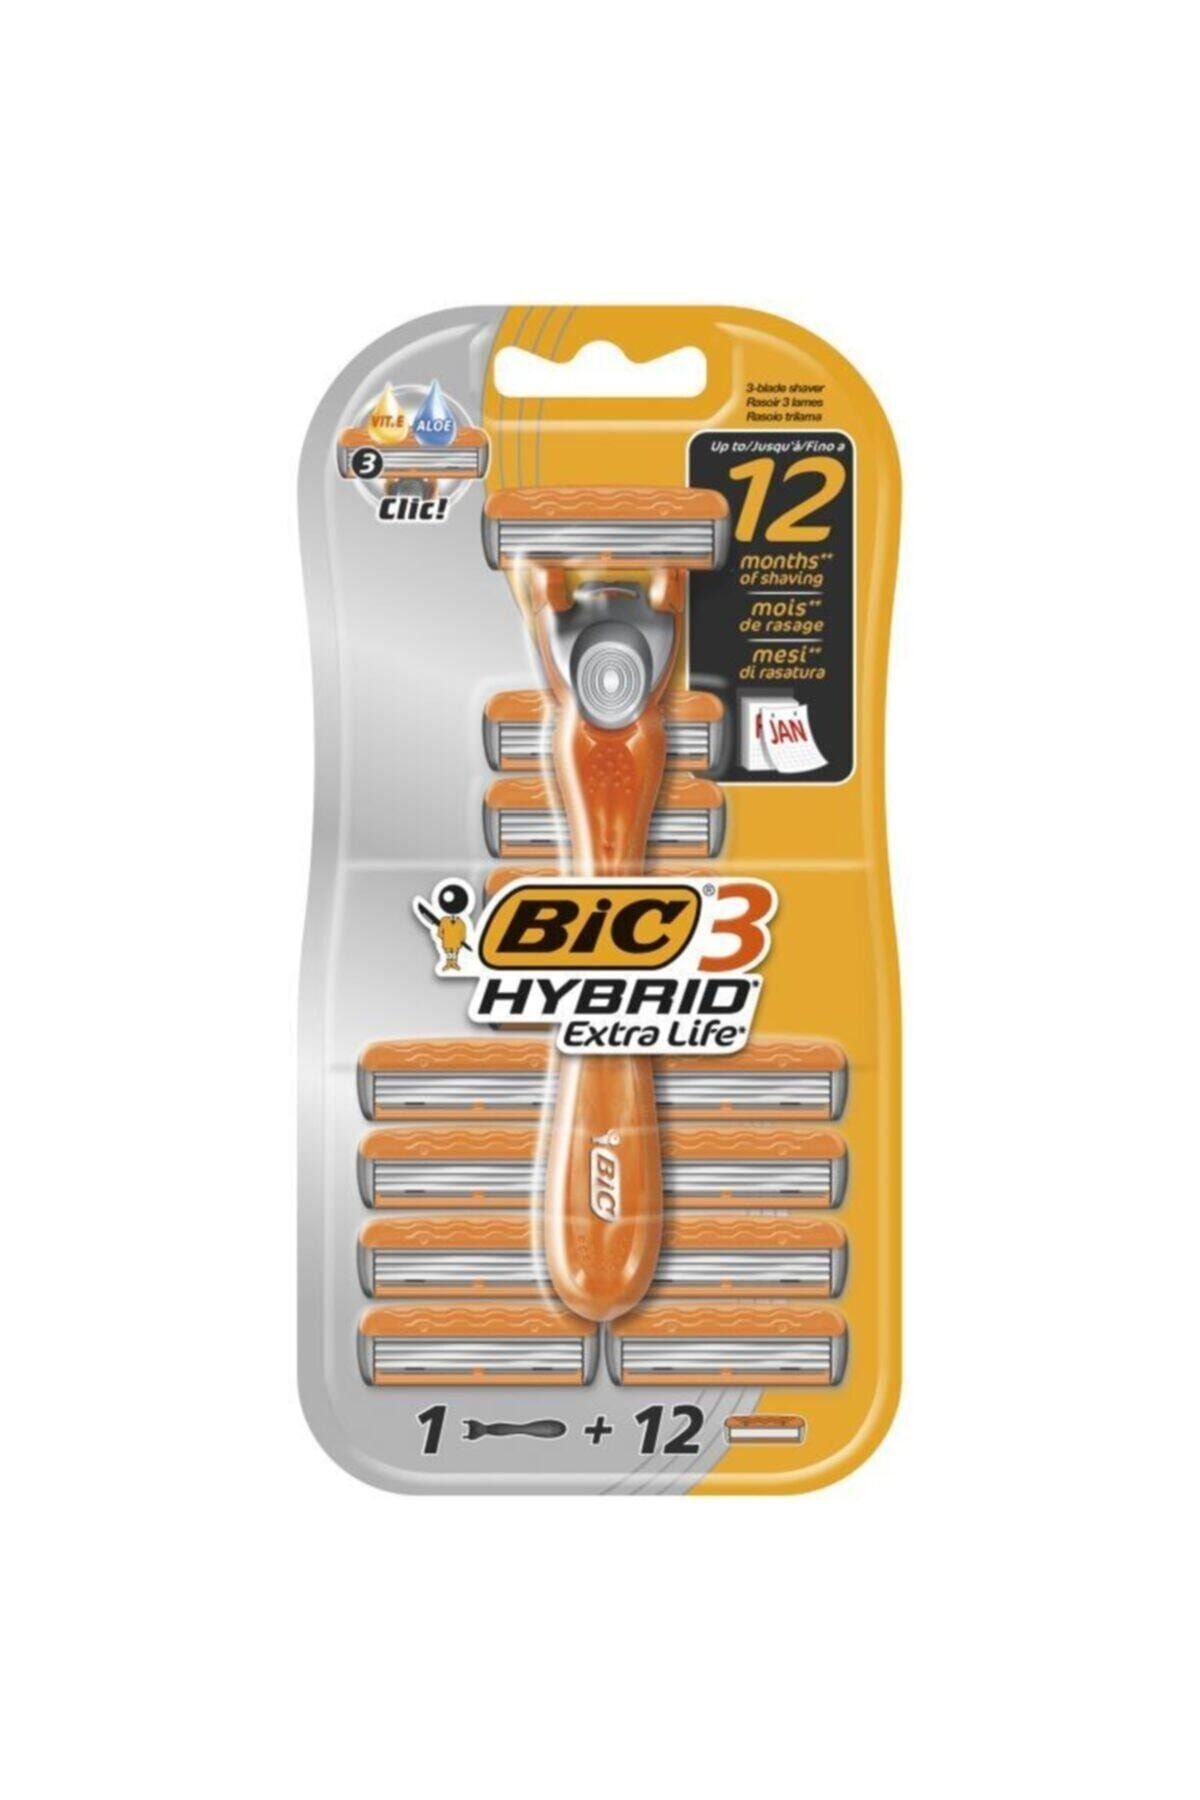 Bic Bıc 3 Hybrid Extra Life Tıraş Bıçağı 12 Kartuşlu